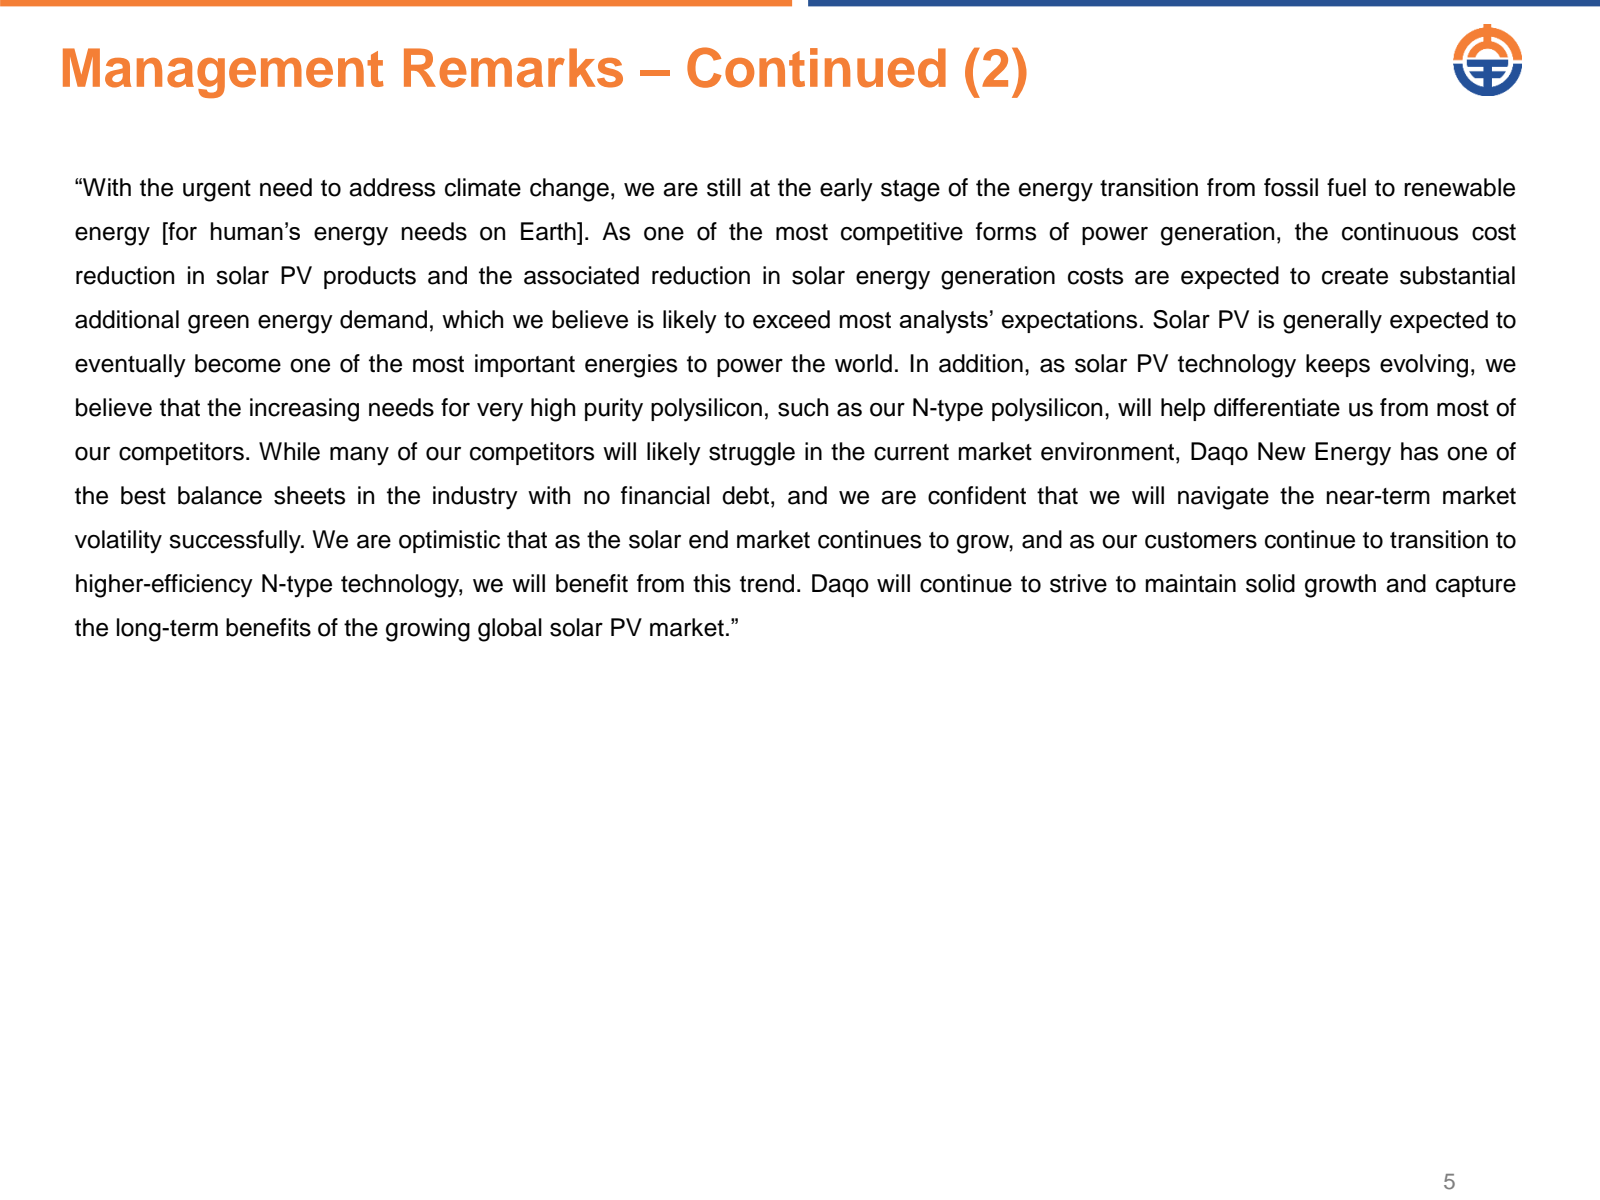 Management Remarks -